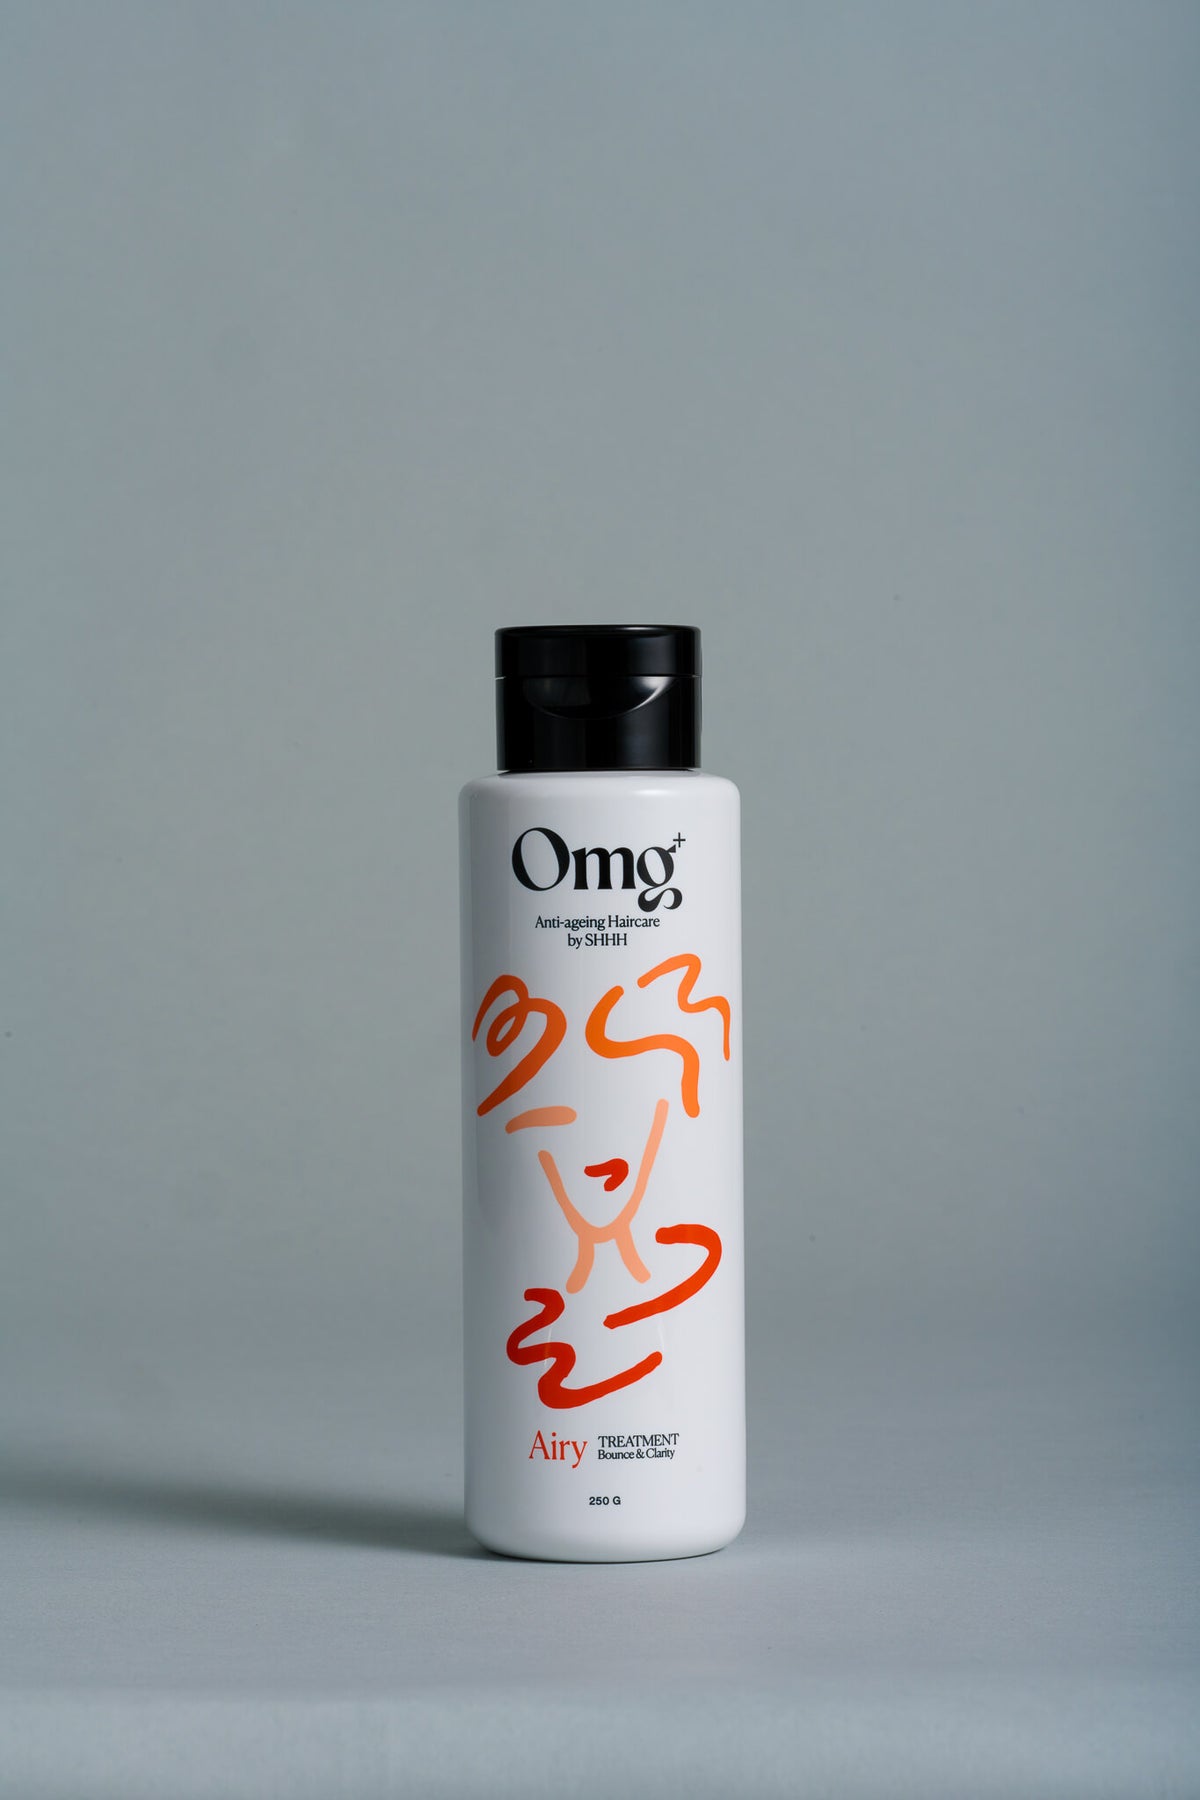 OMG+ Airy Treatment (250g)